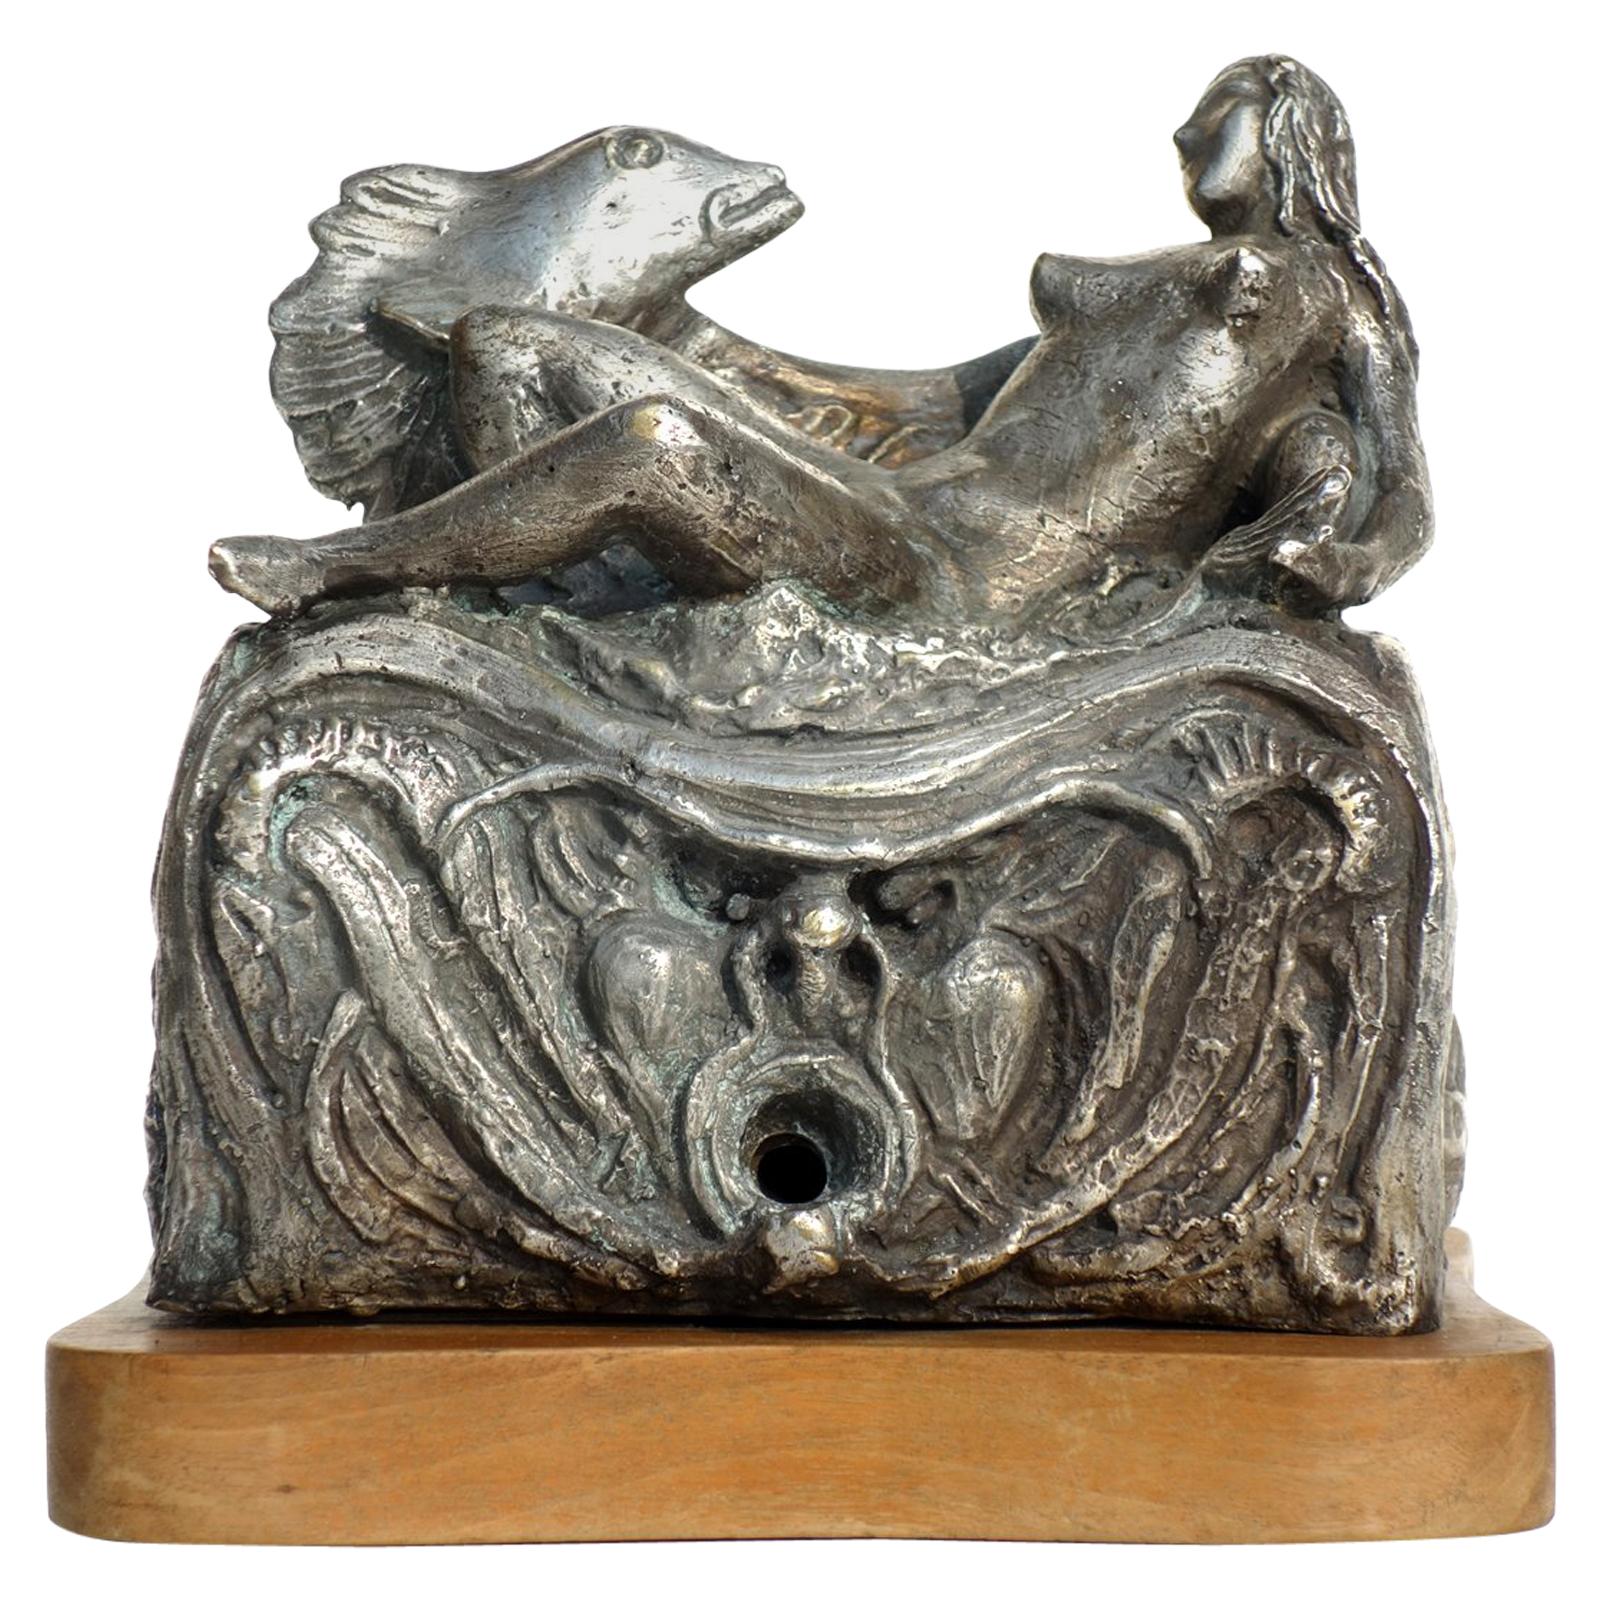 1940er Jahre von Omero Taddeini Esoteric Masonic Silber Metall Skulptur Musikkästchen